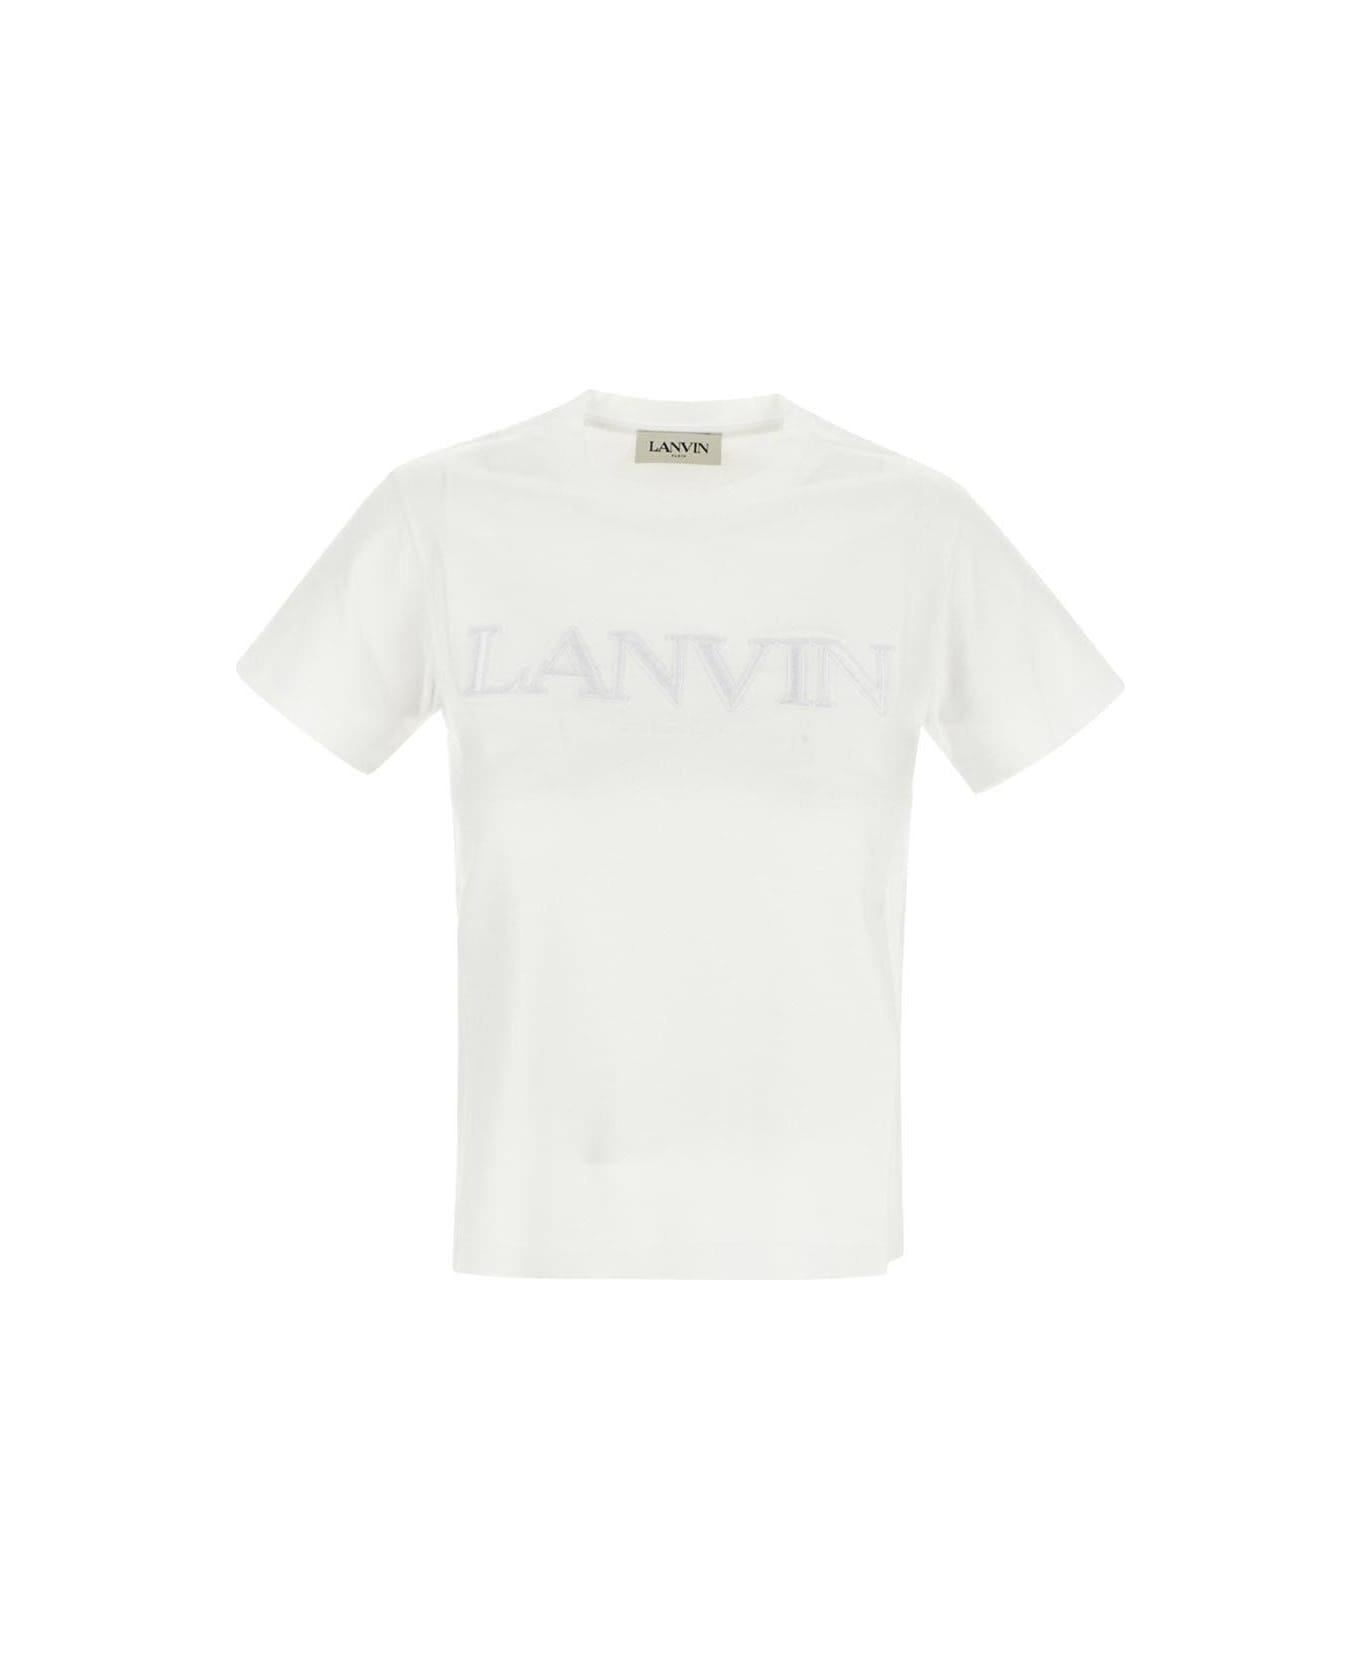 Lanvin Tee T-shirt Tシャツ